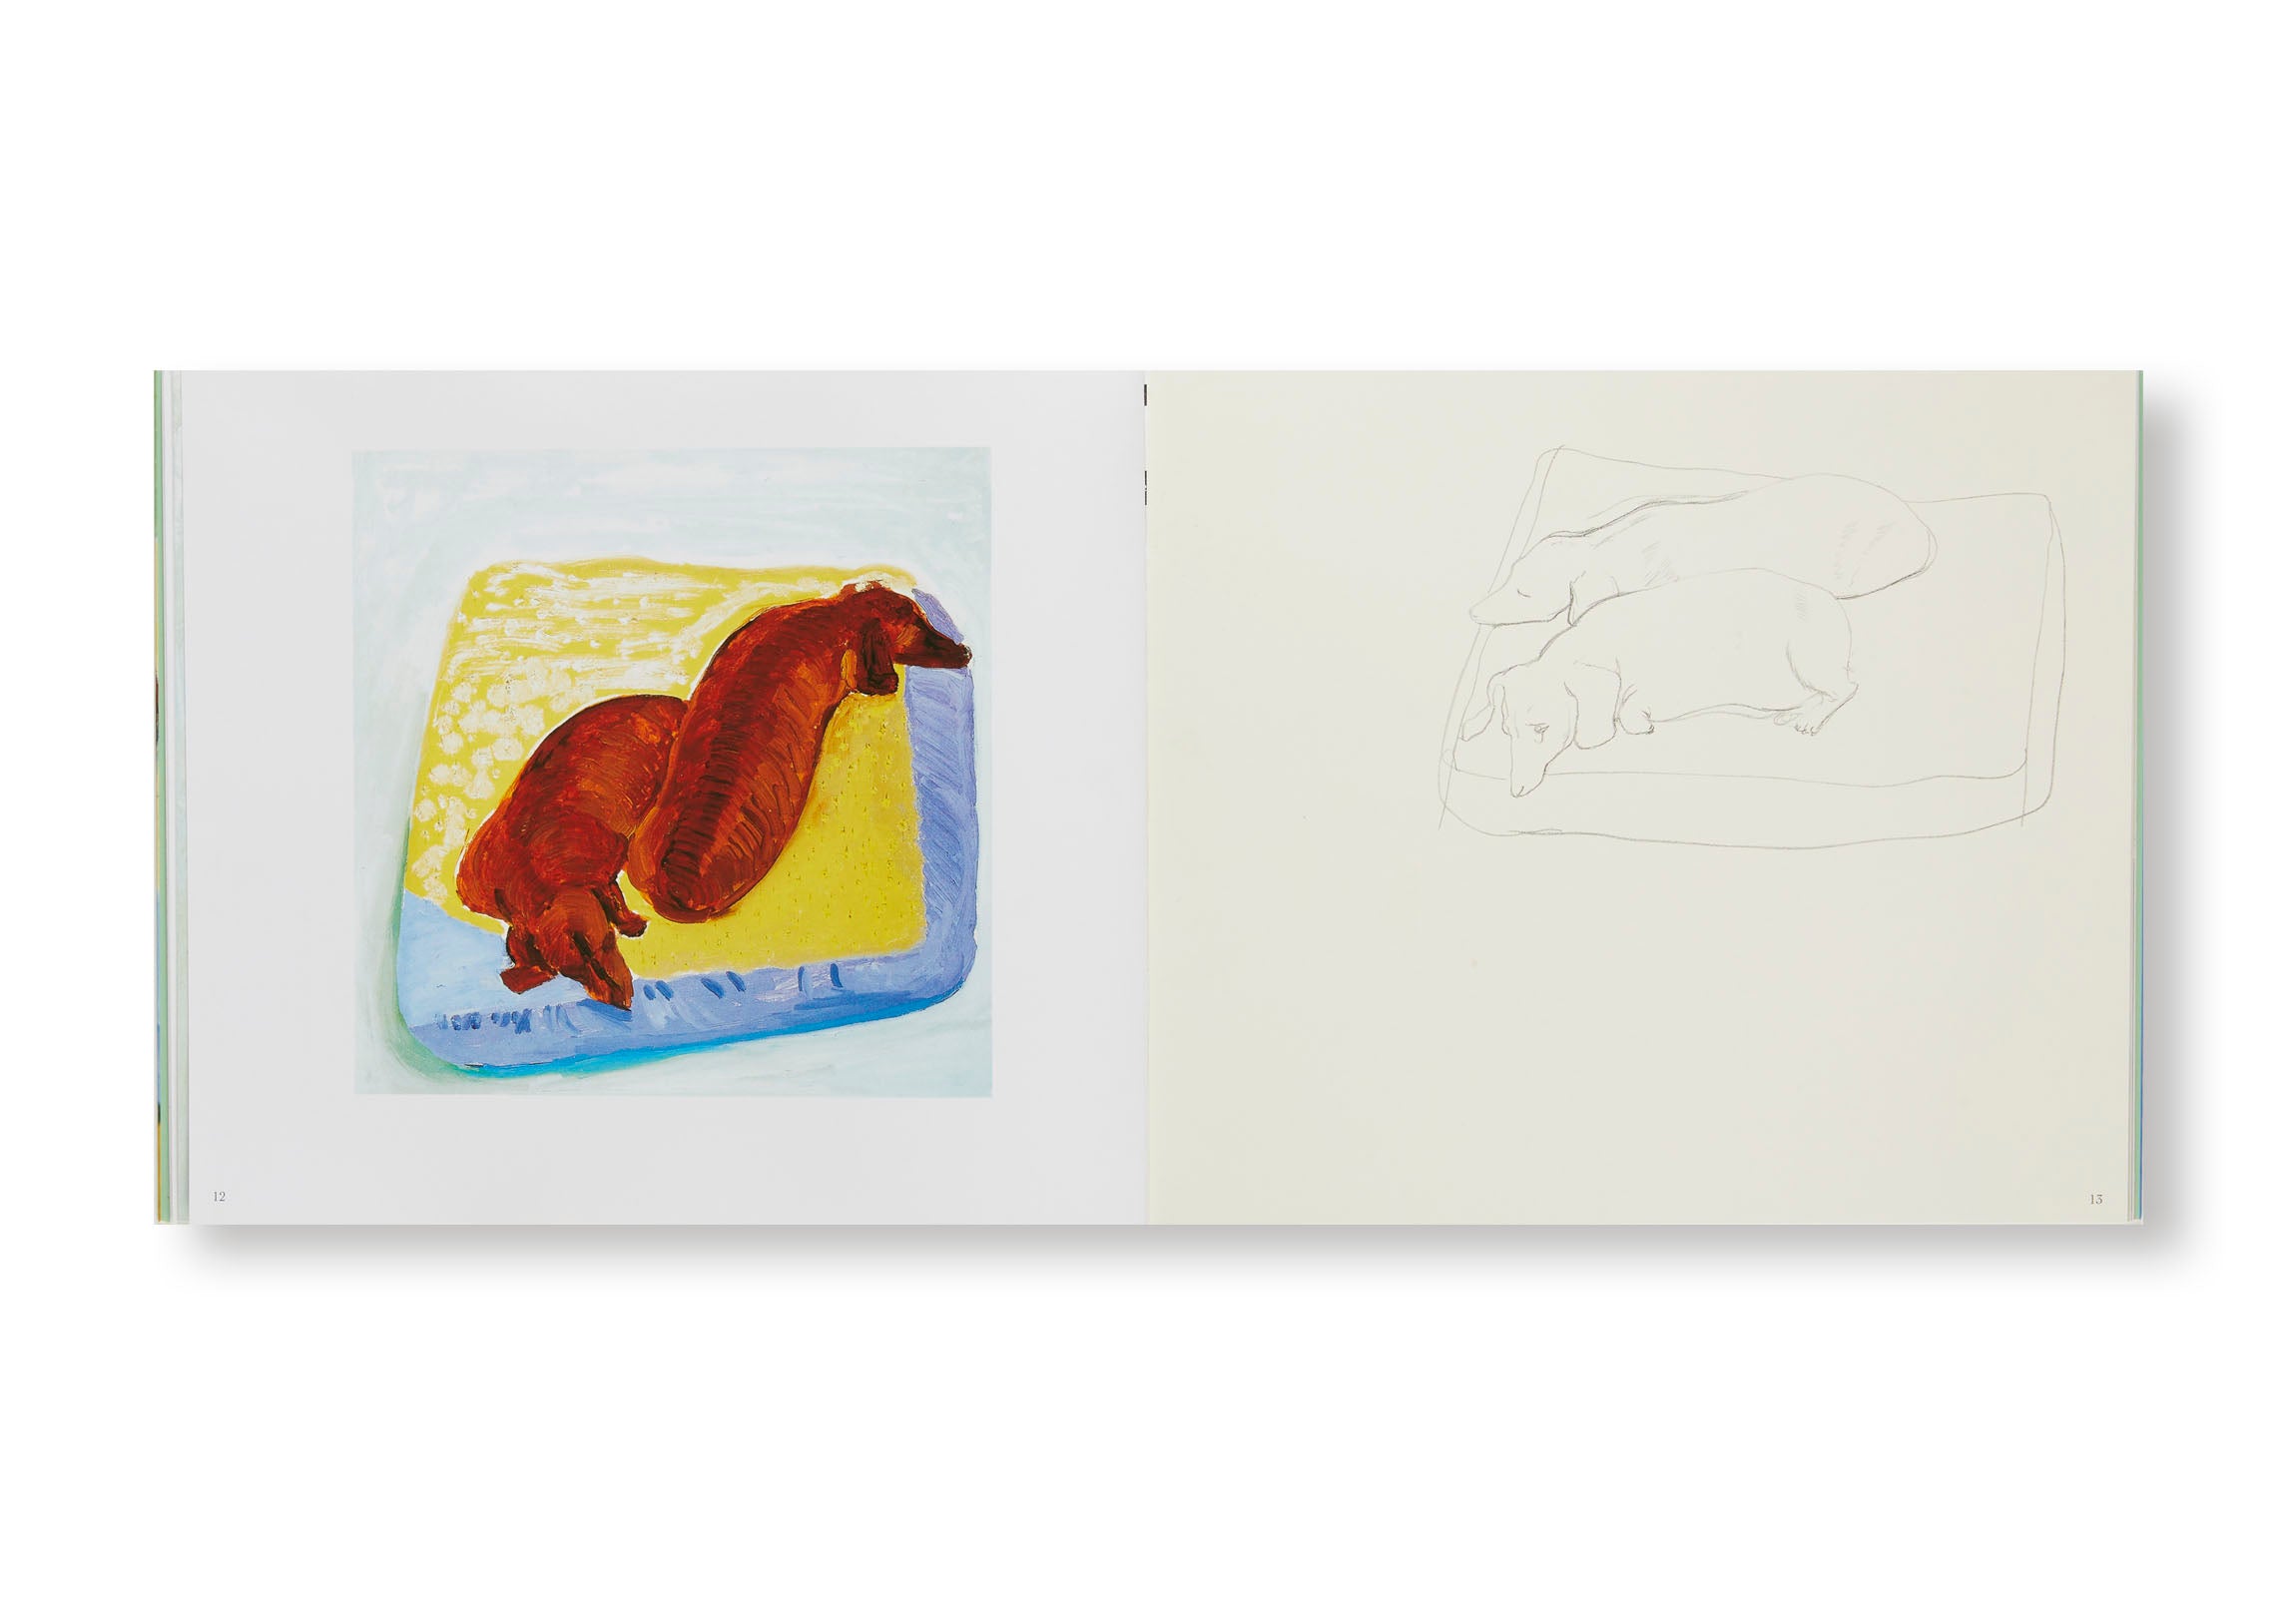 DAVID HOCKNEY'S DOG DAYS by David Hockney